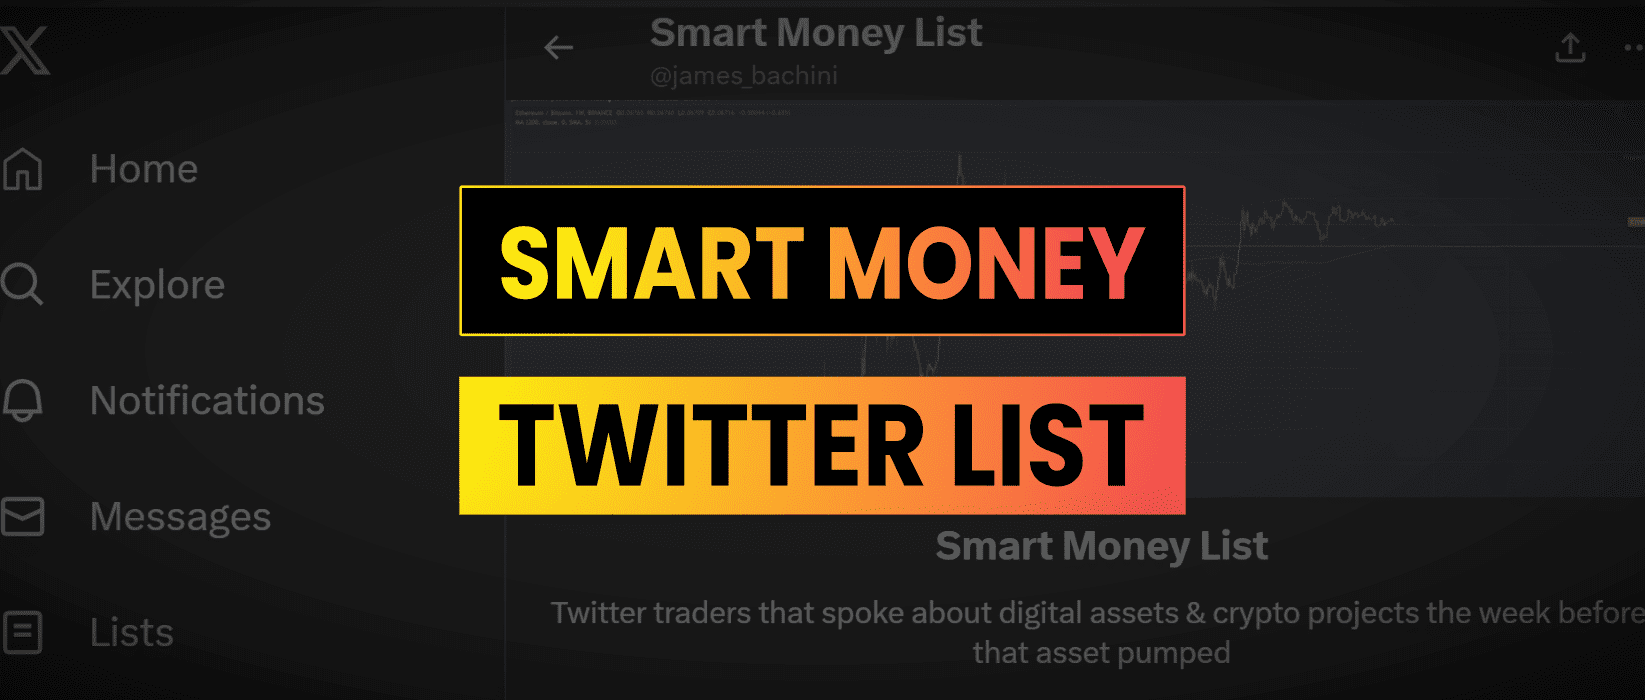 How I Built A Smart Money List On Twitter